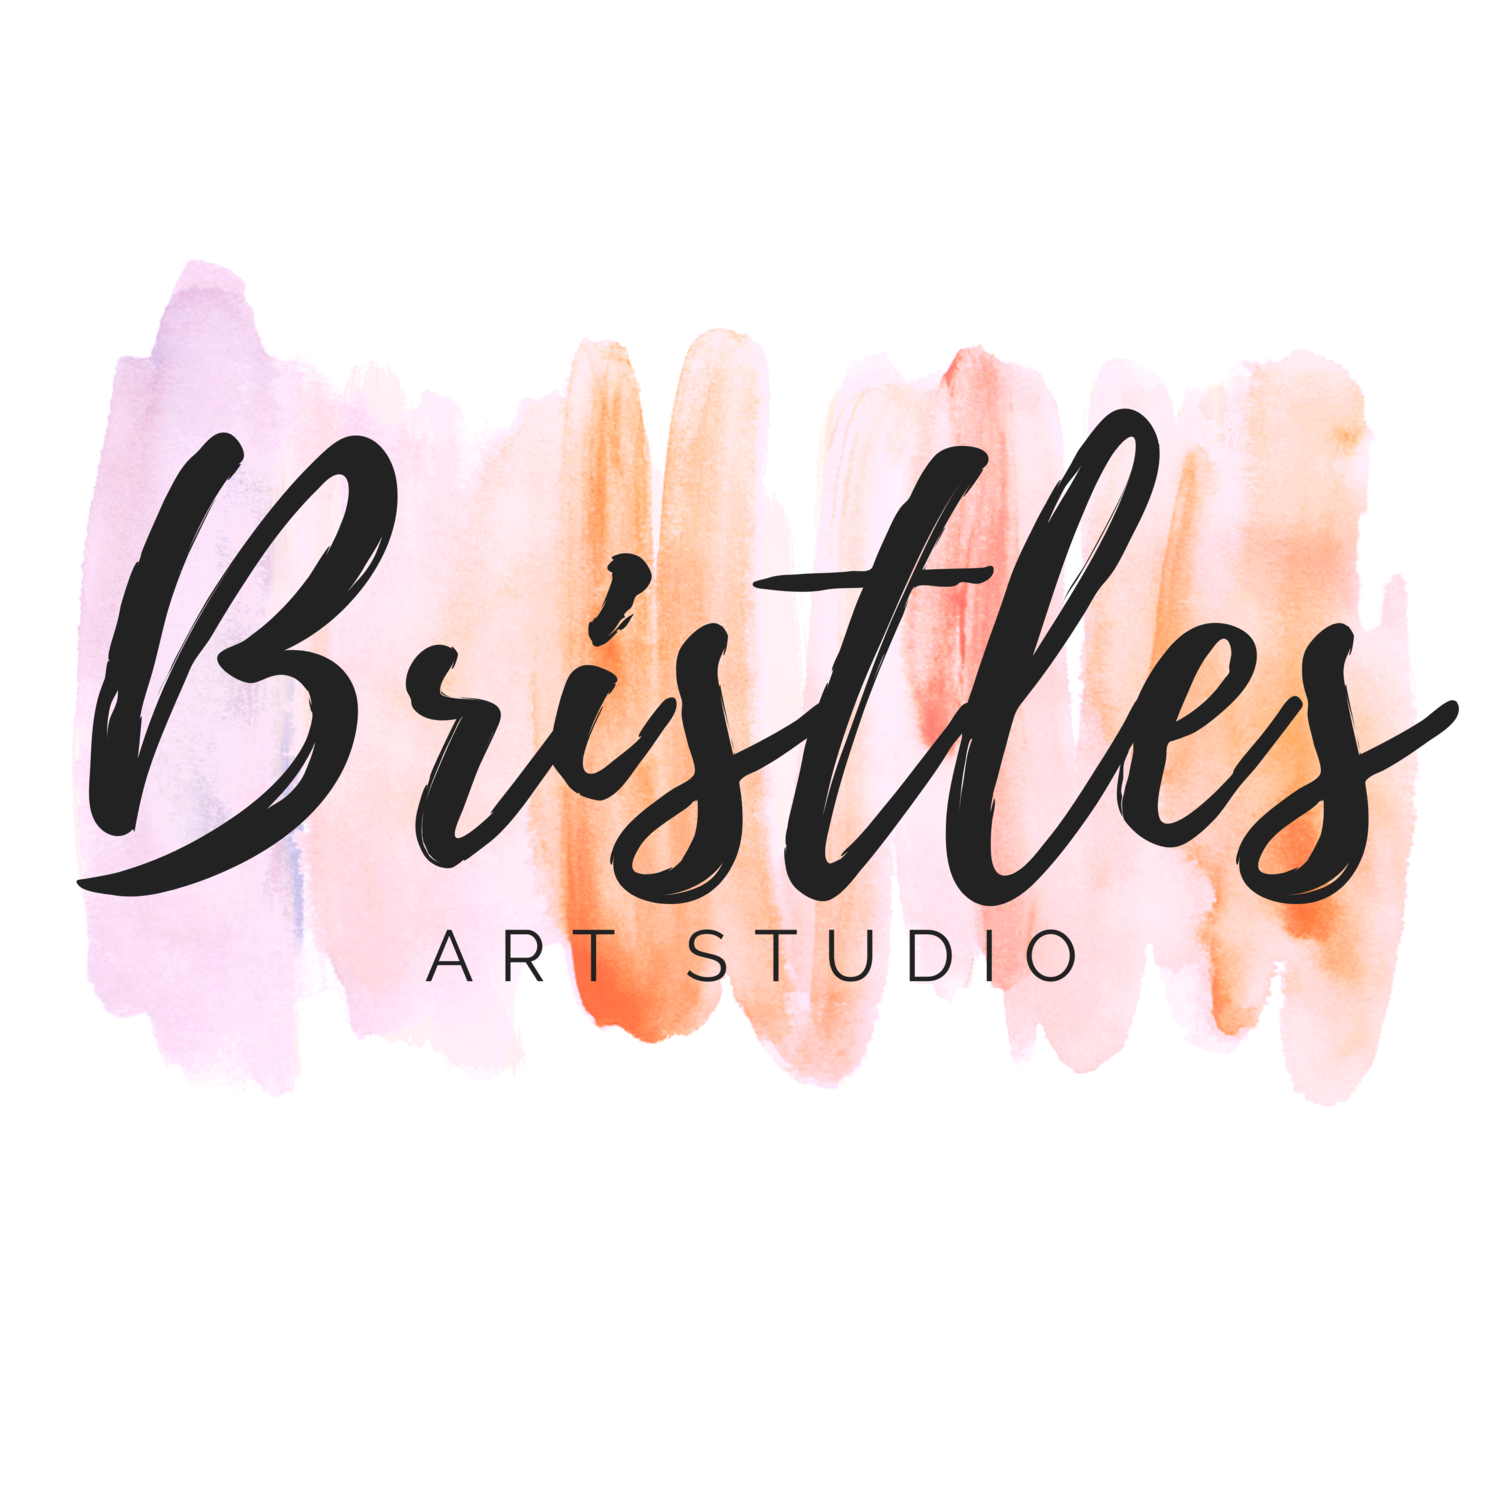 Bristles Art Studio